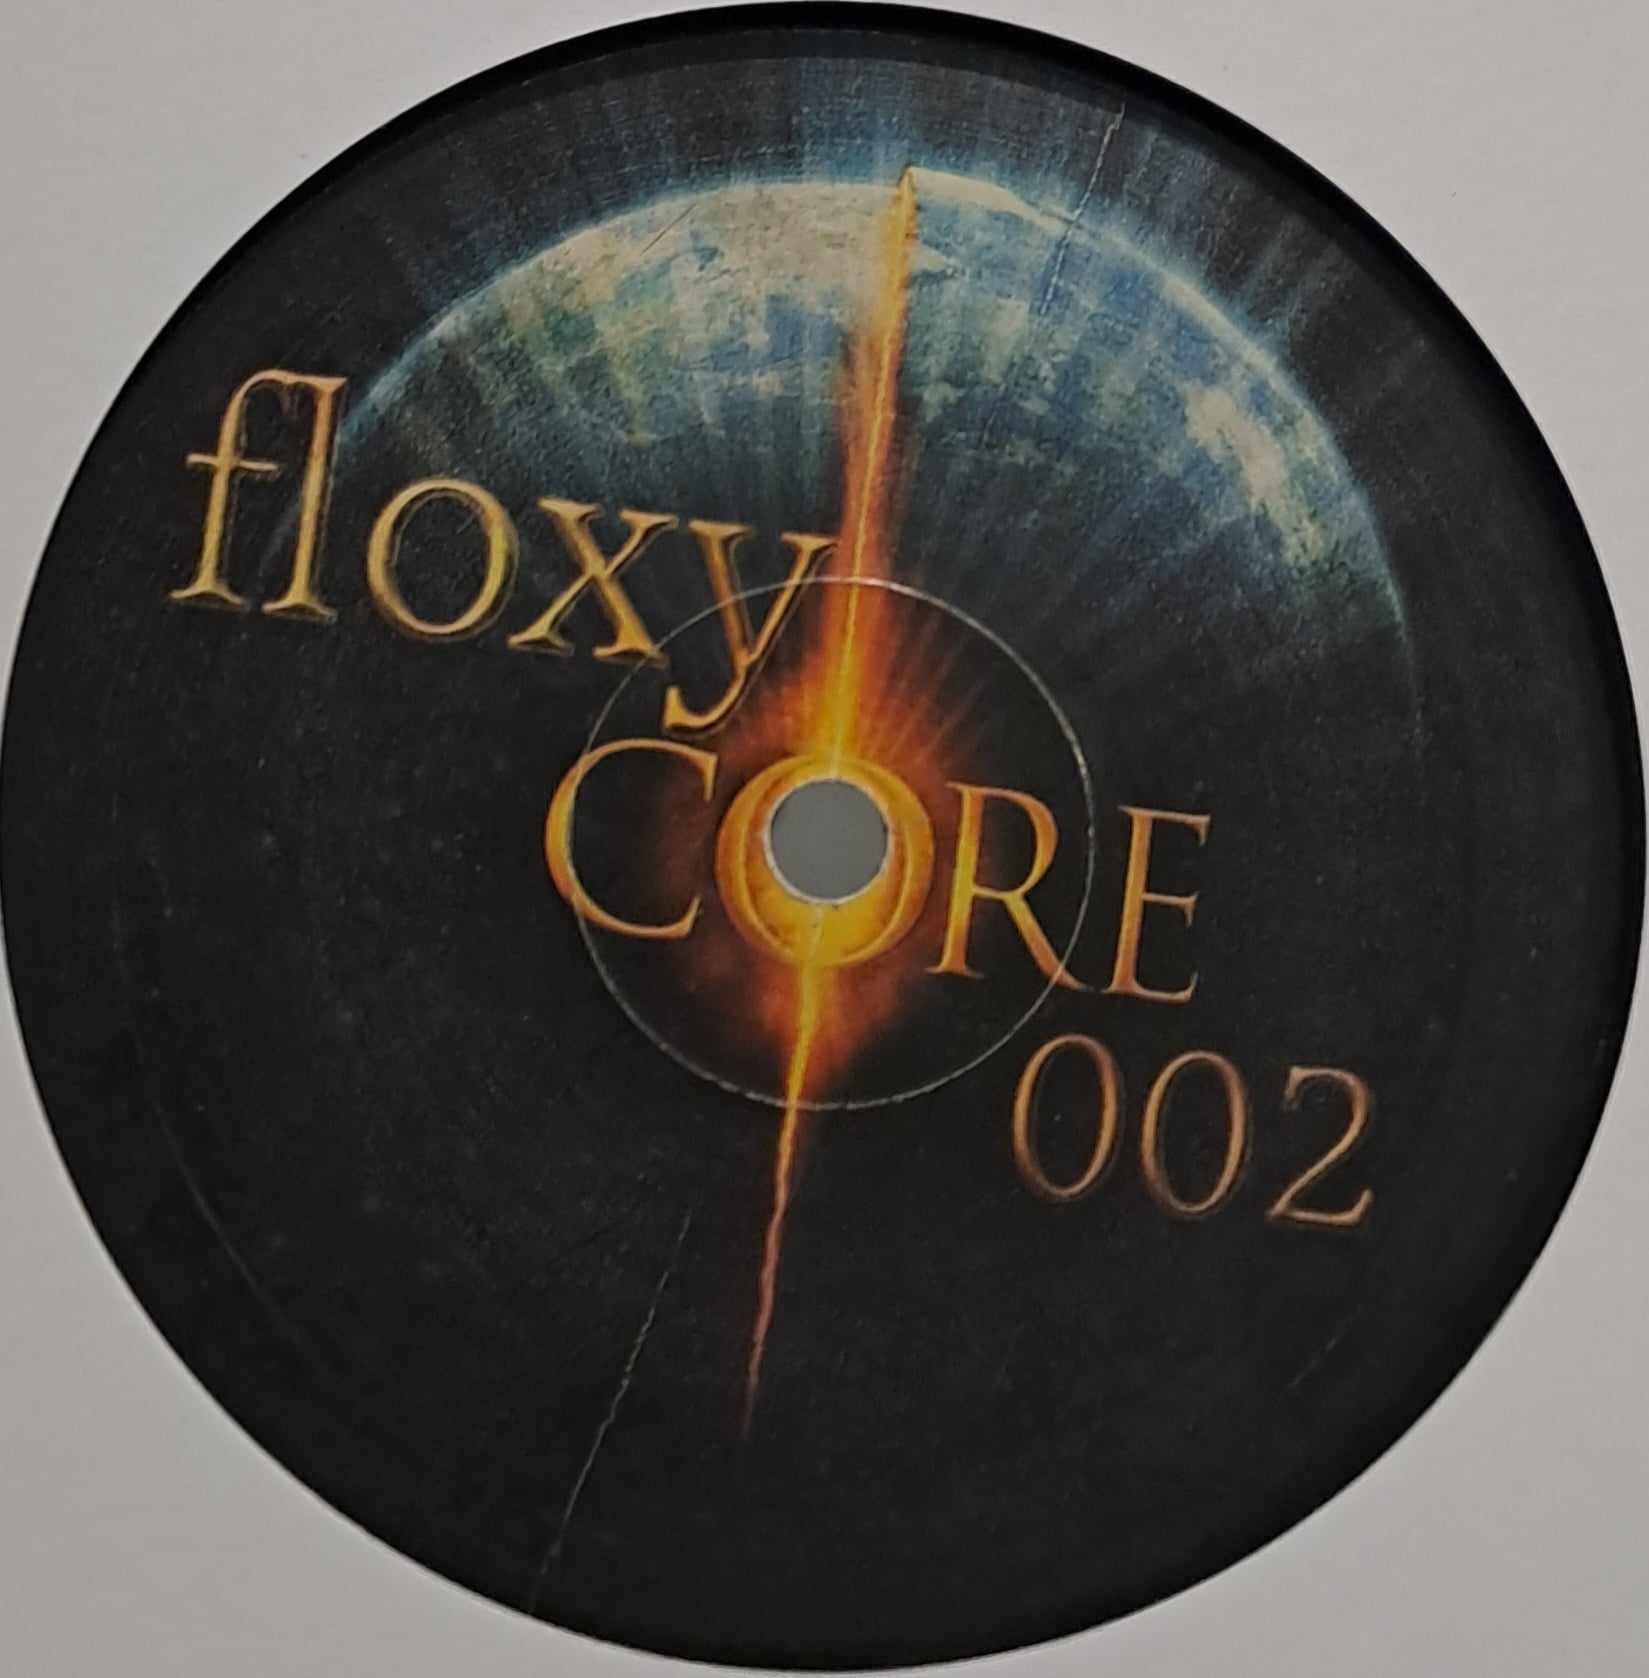 Floxycore 02 - vinyle tribecore